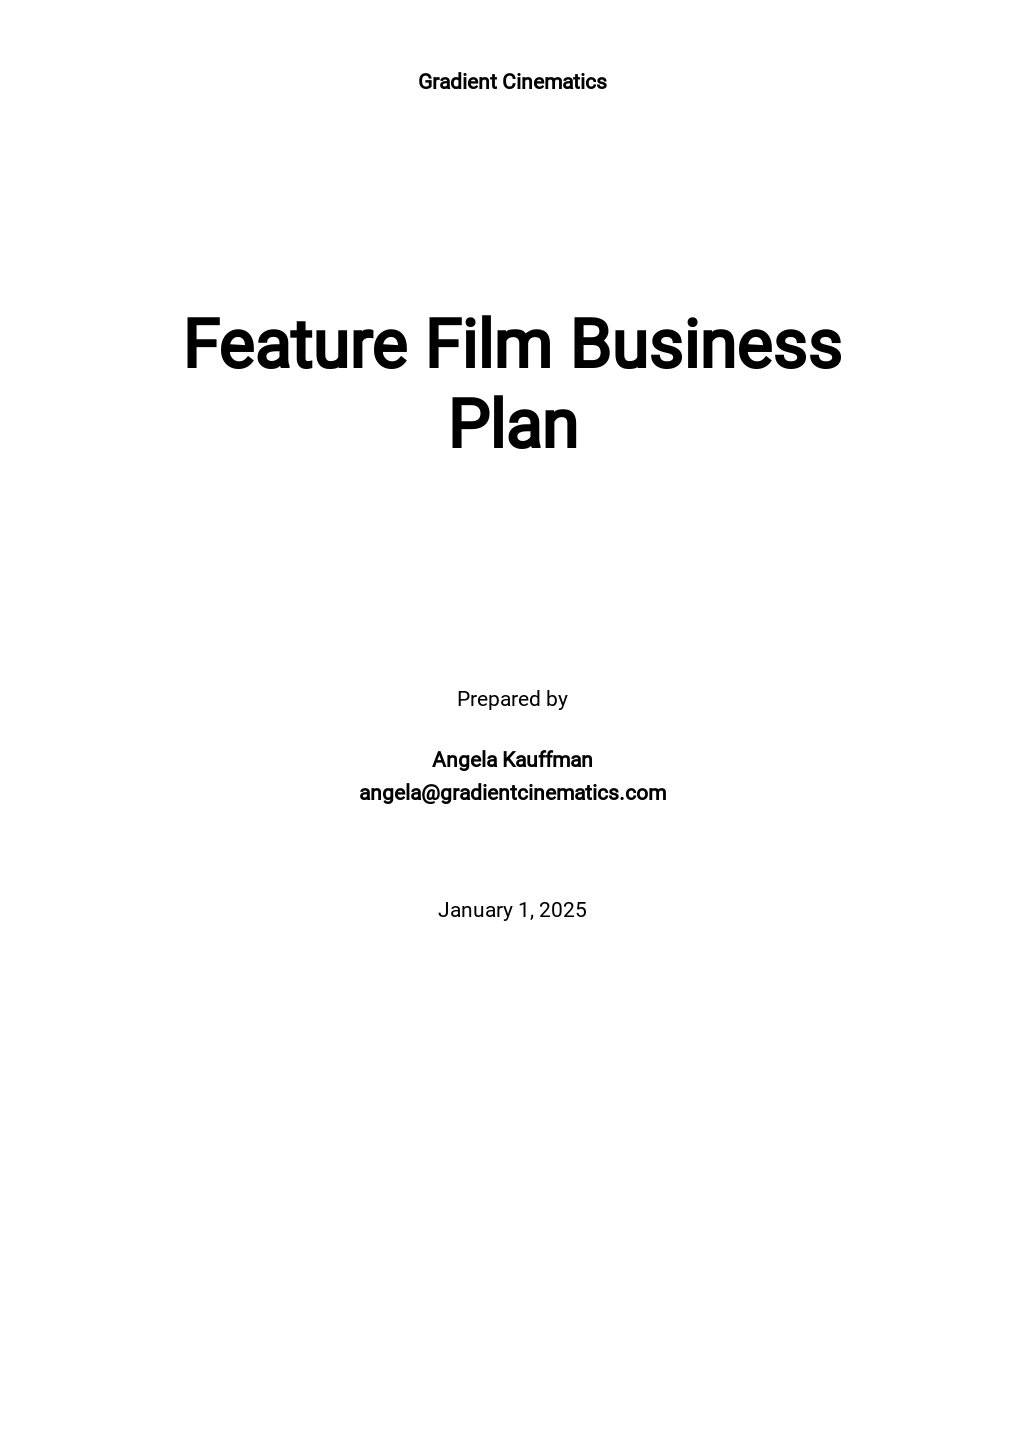 Feature Film business Plan Template.jpe